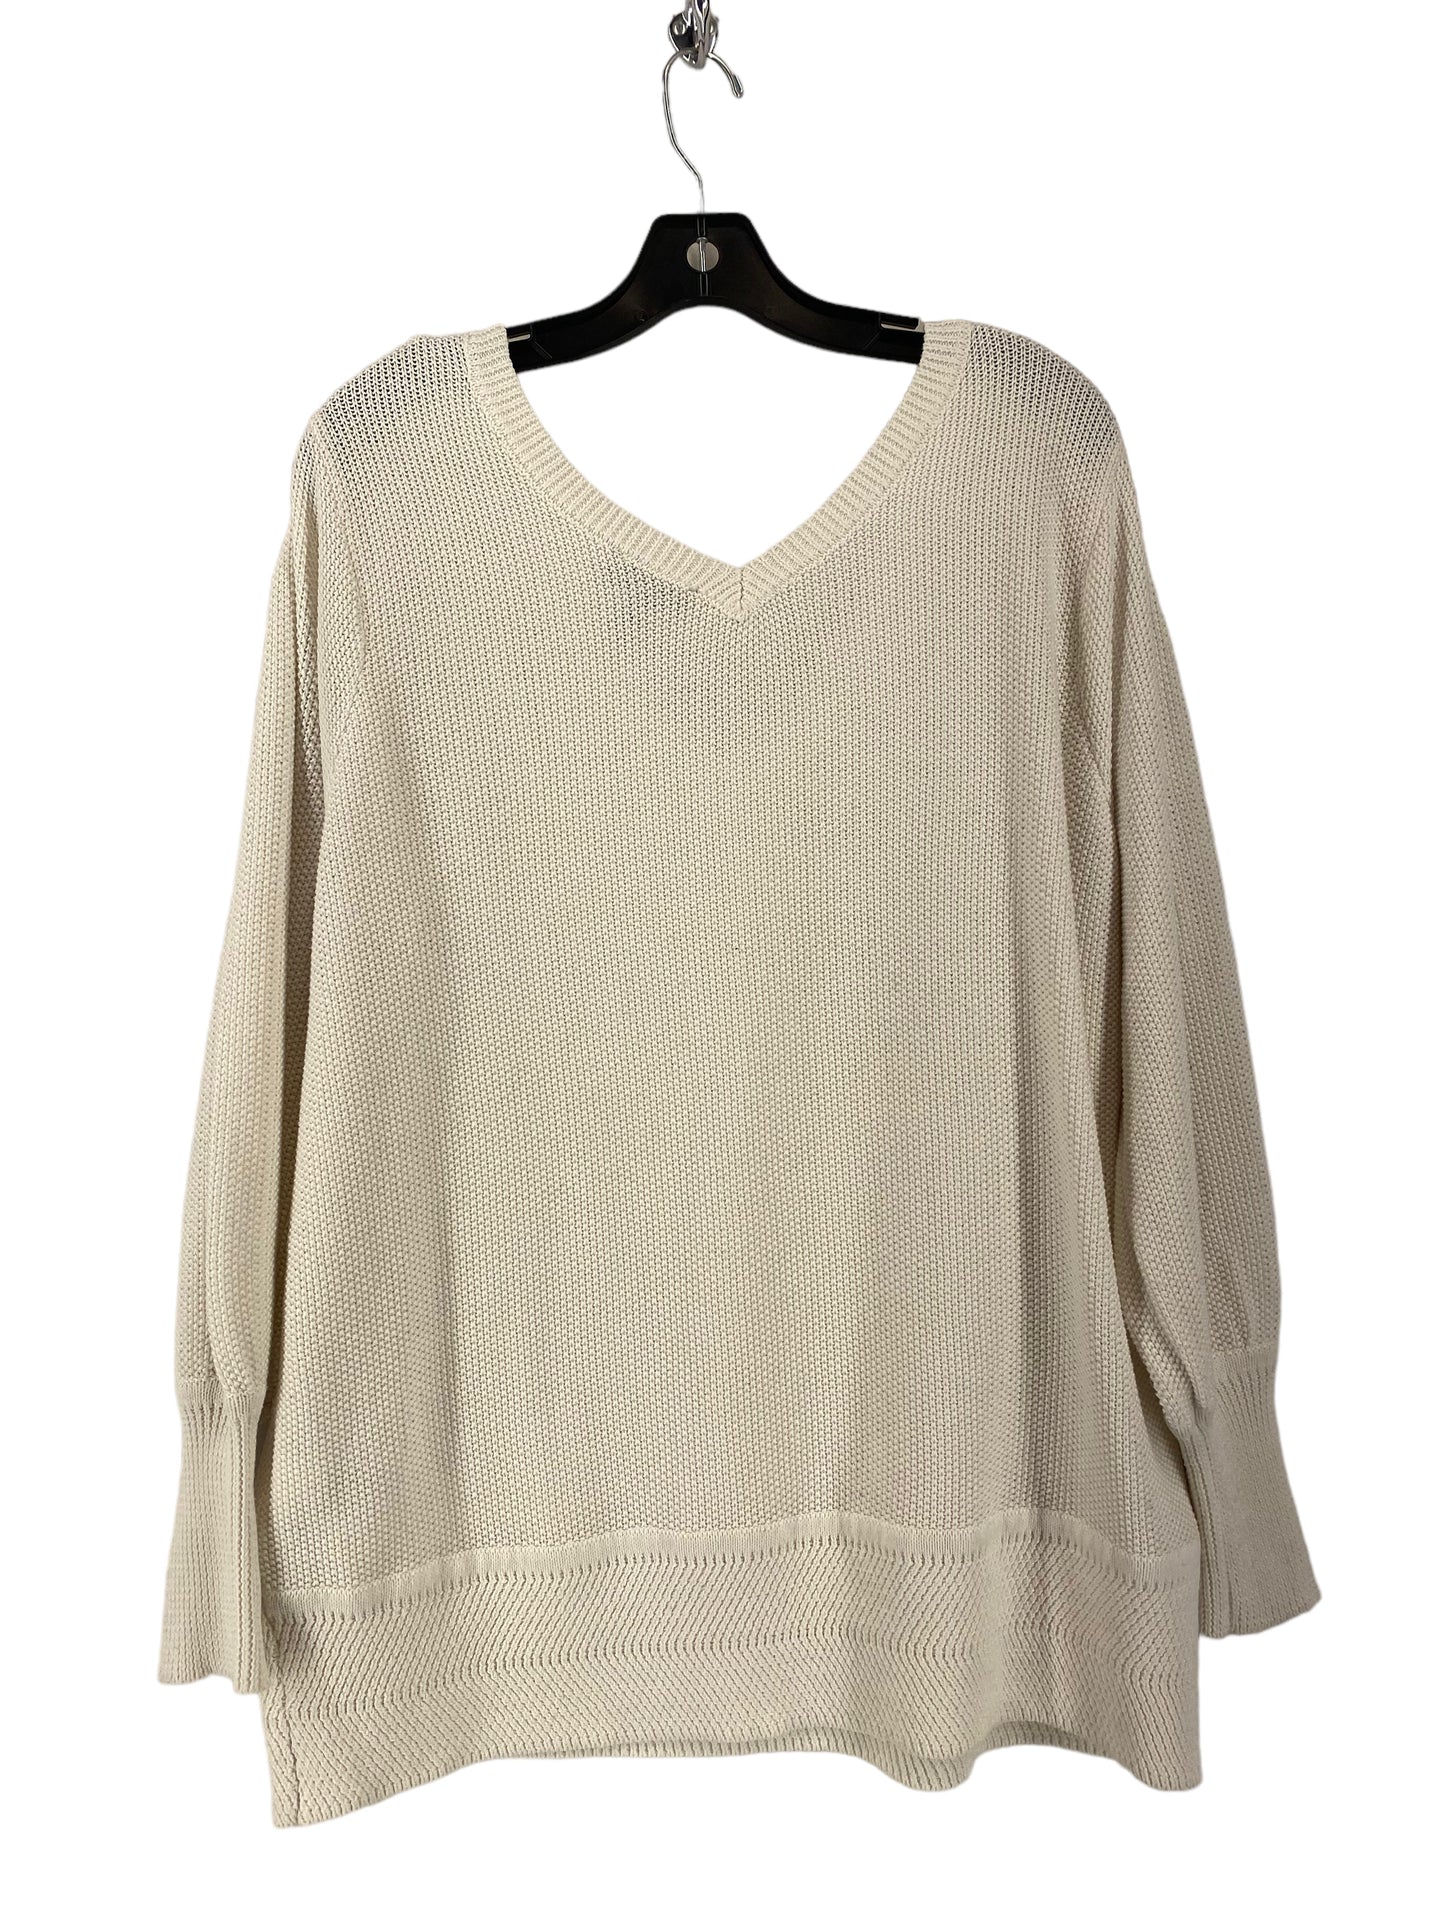 Sweater By Jessica Simpson  Size: 2x